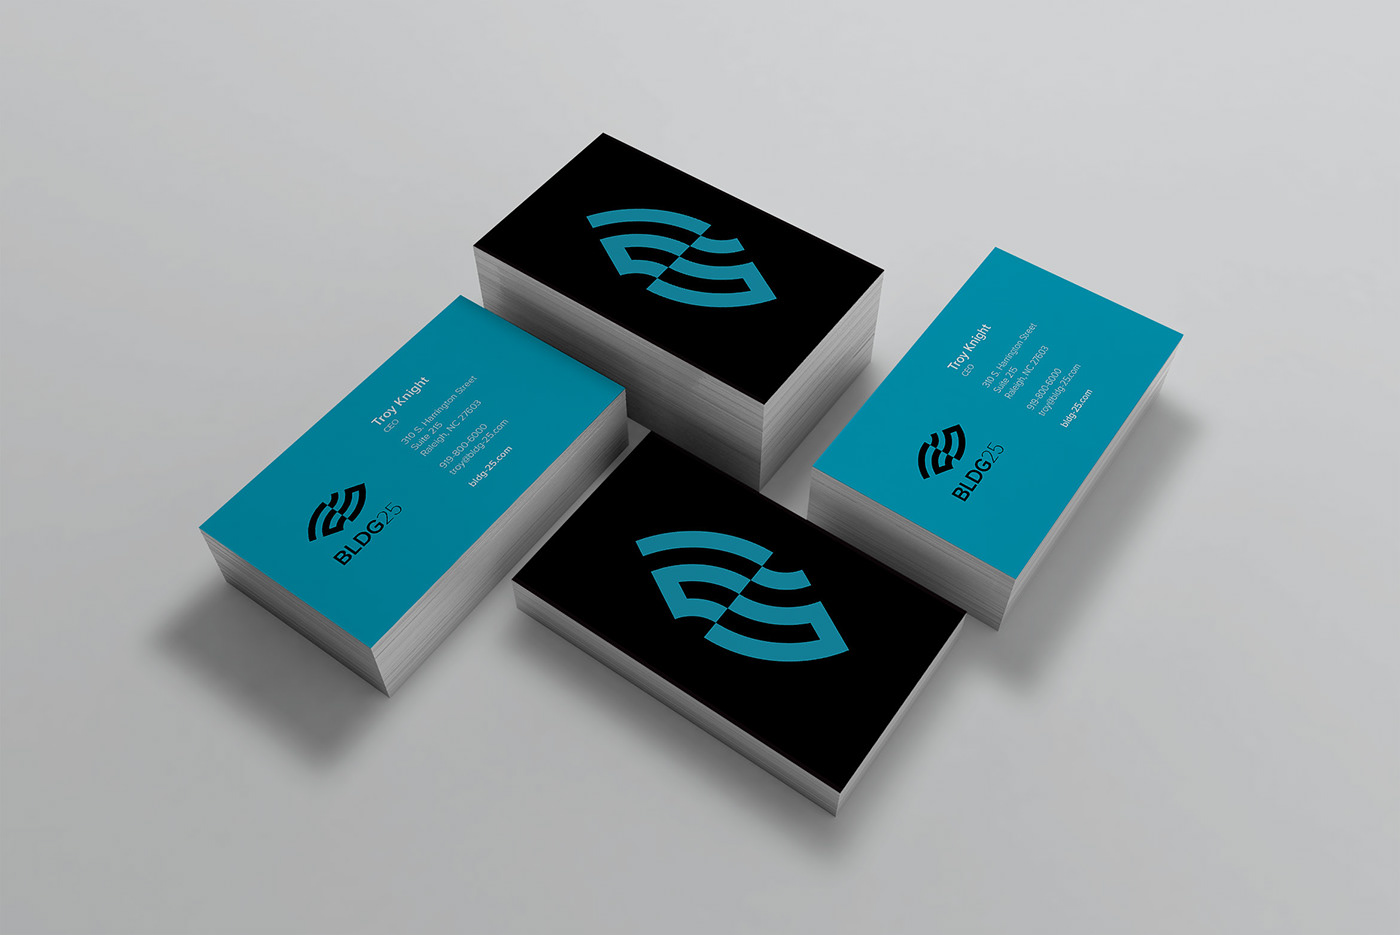 BLDG25 - graphic design and branding by TRÜF